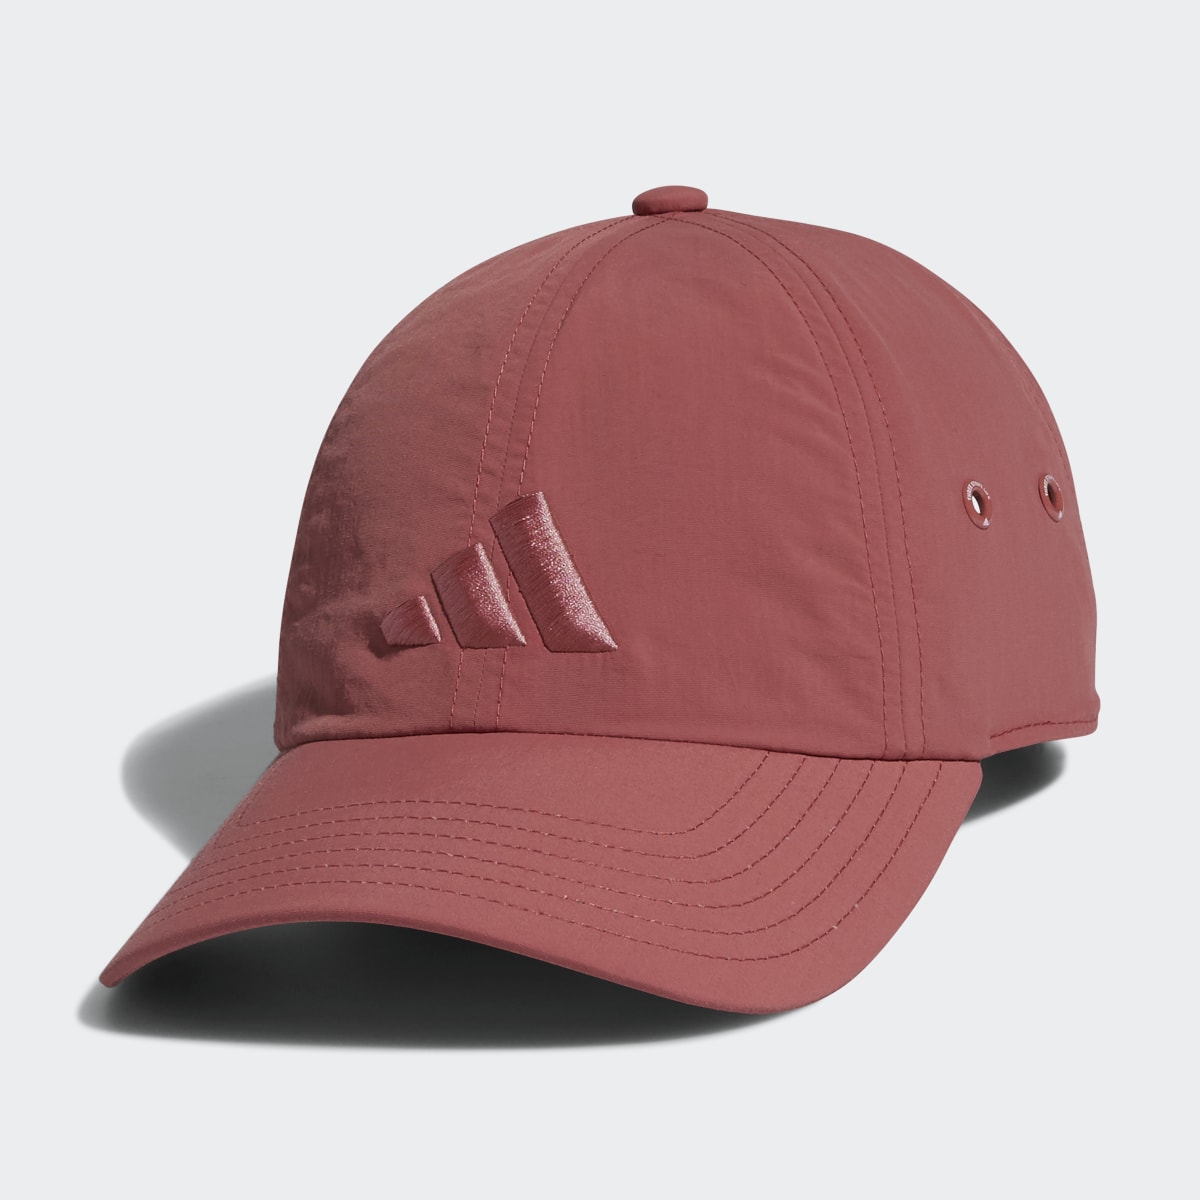 Adidas Influencer 3 Hat. 4